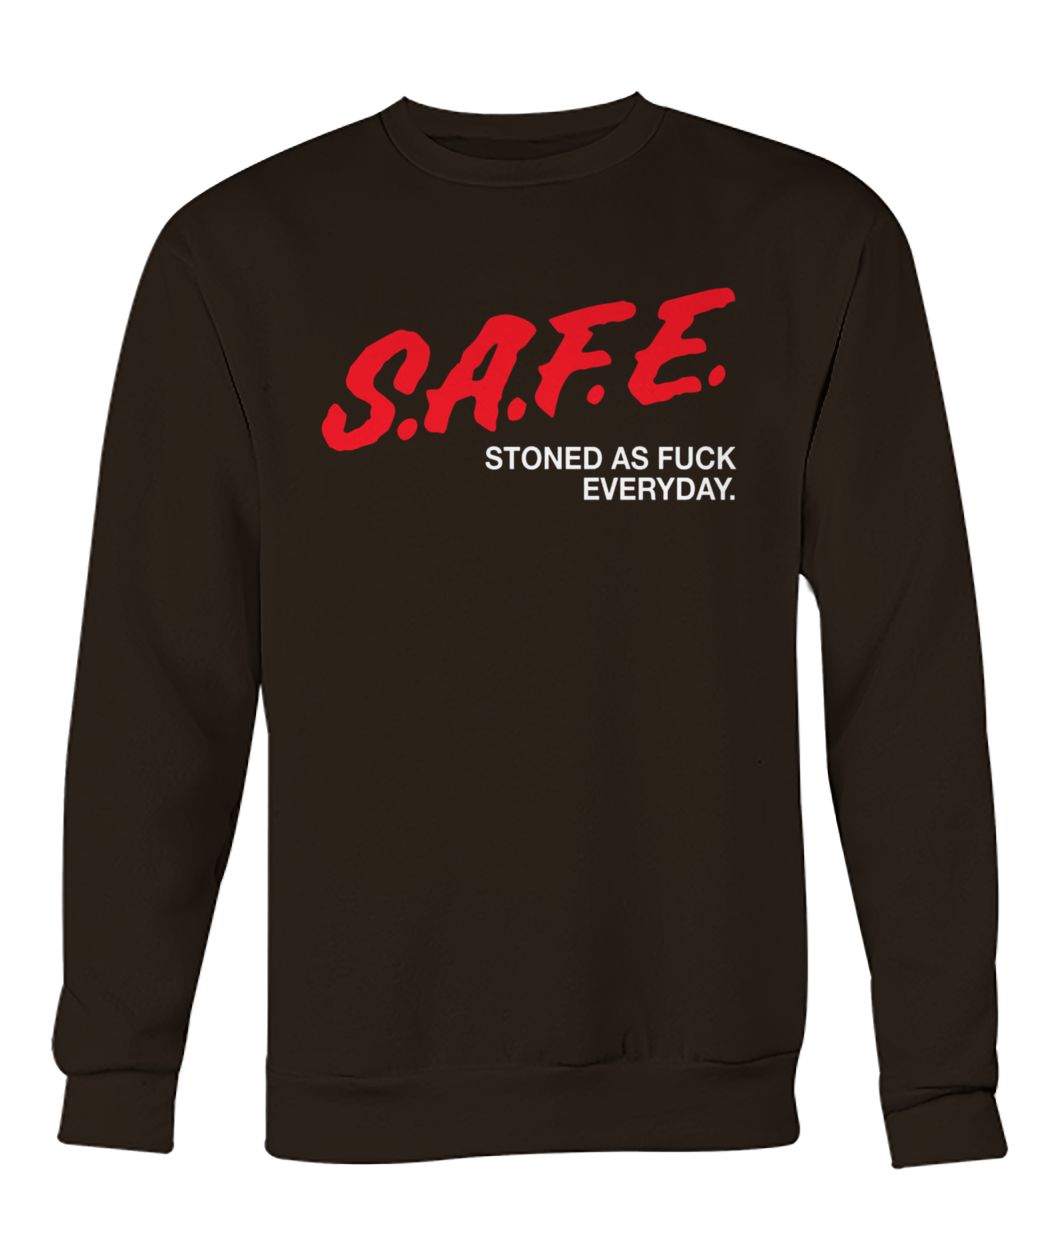 Safe stoned as fuck everyday crew neck sweatshirt